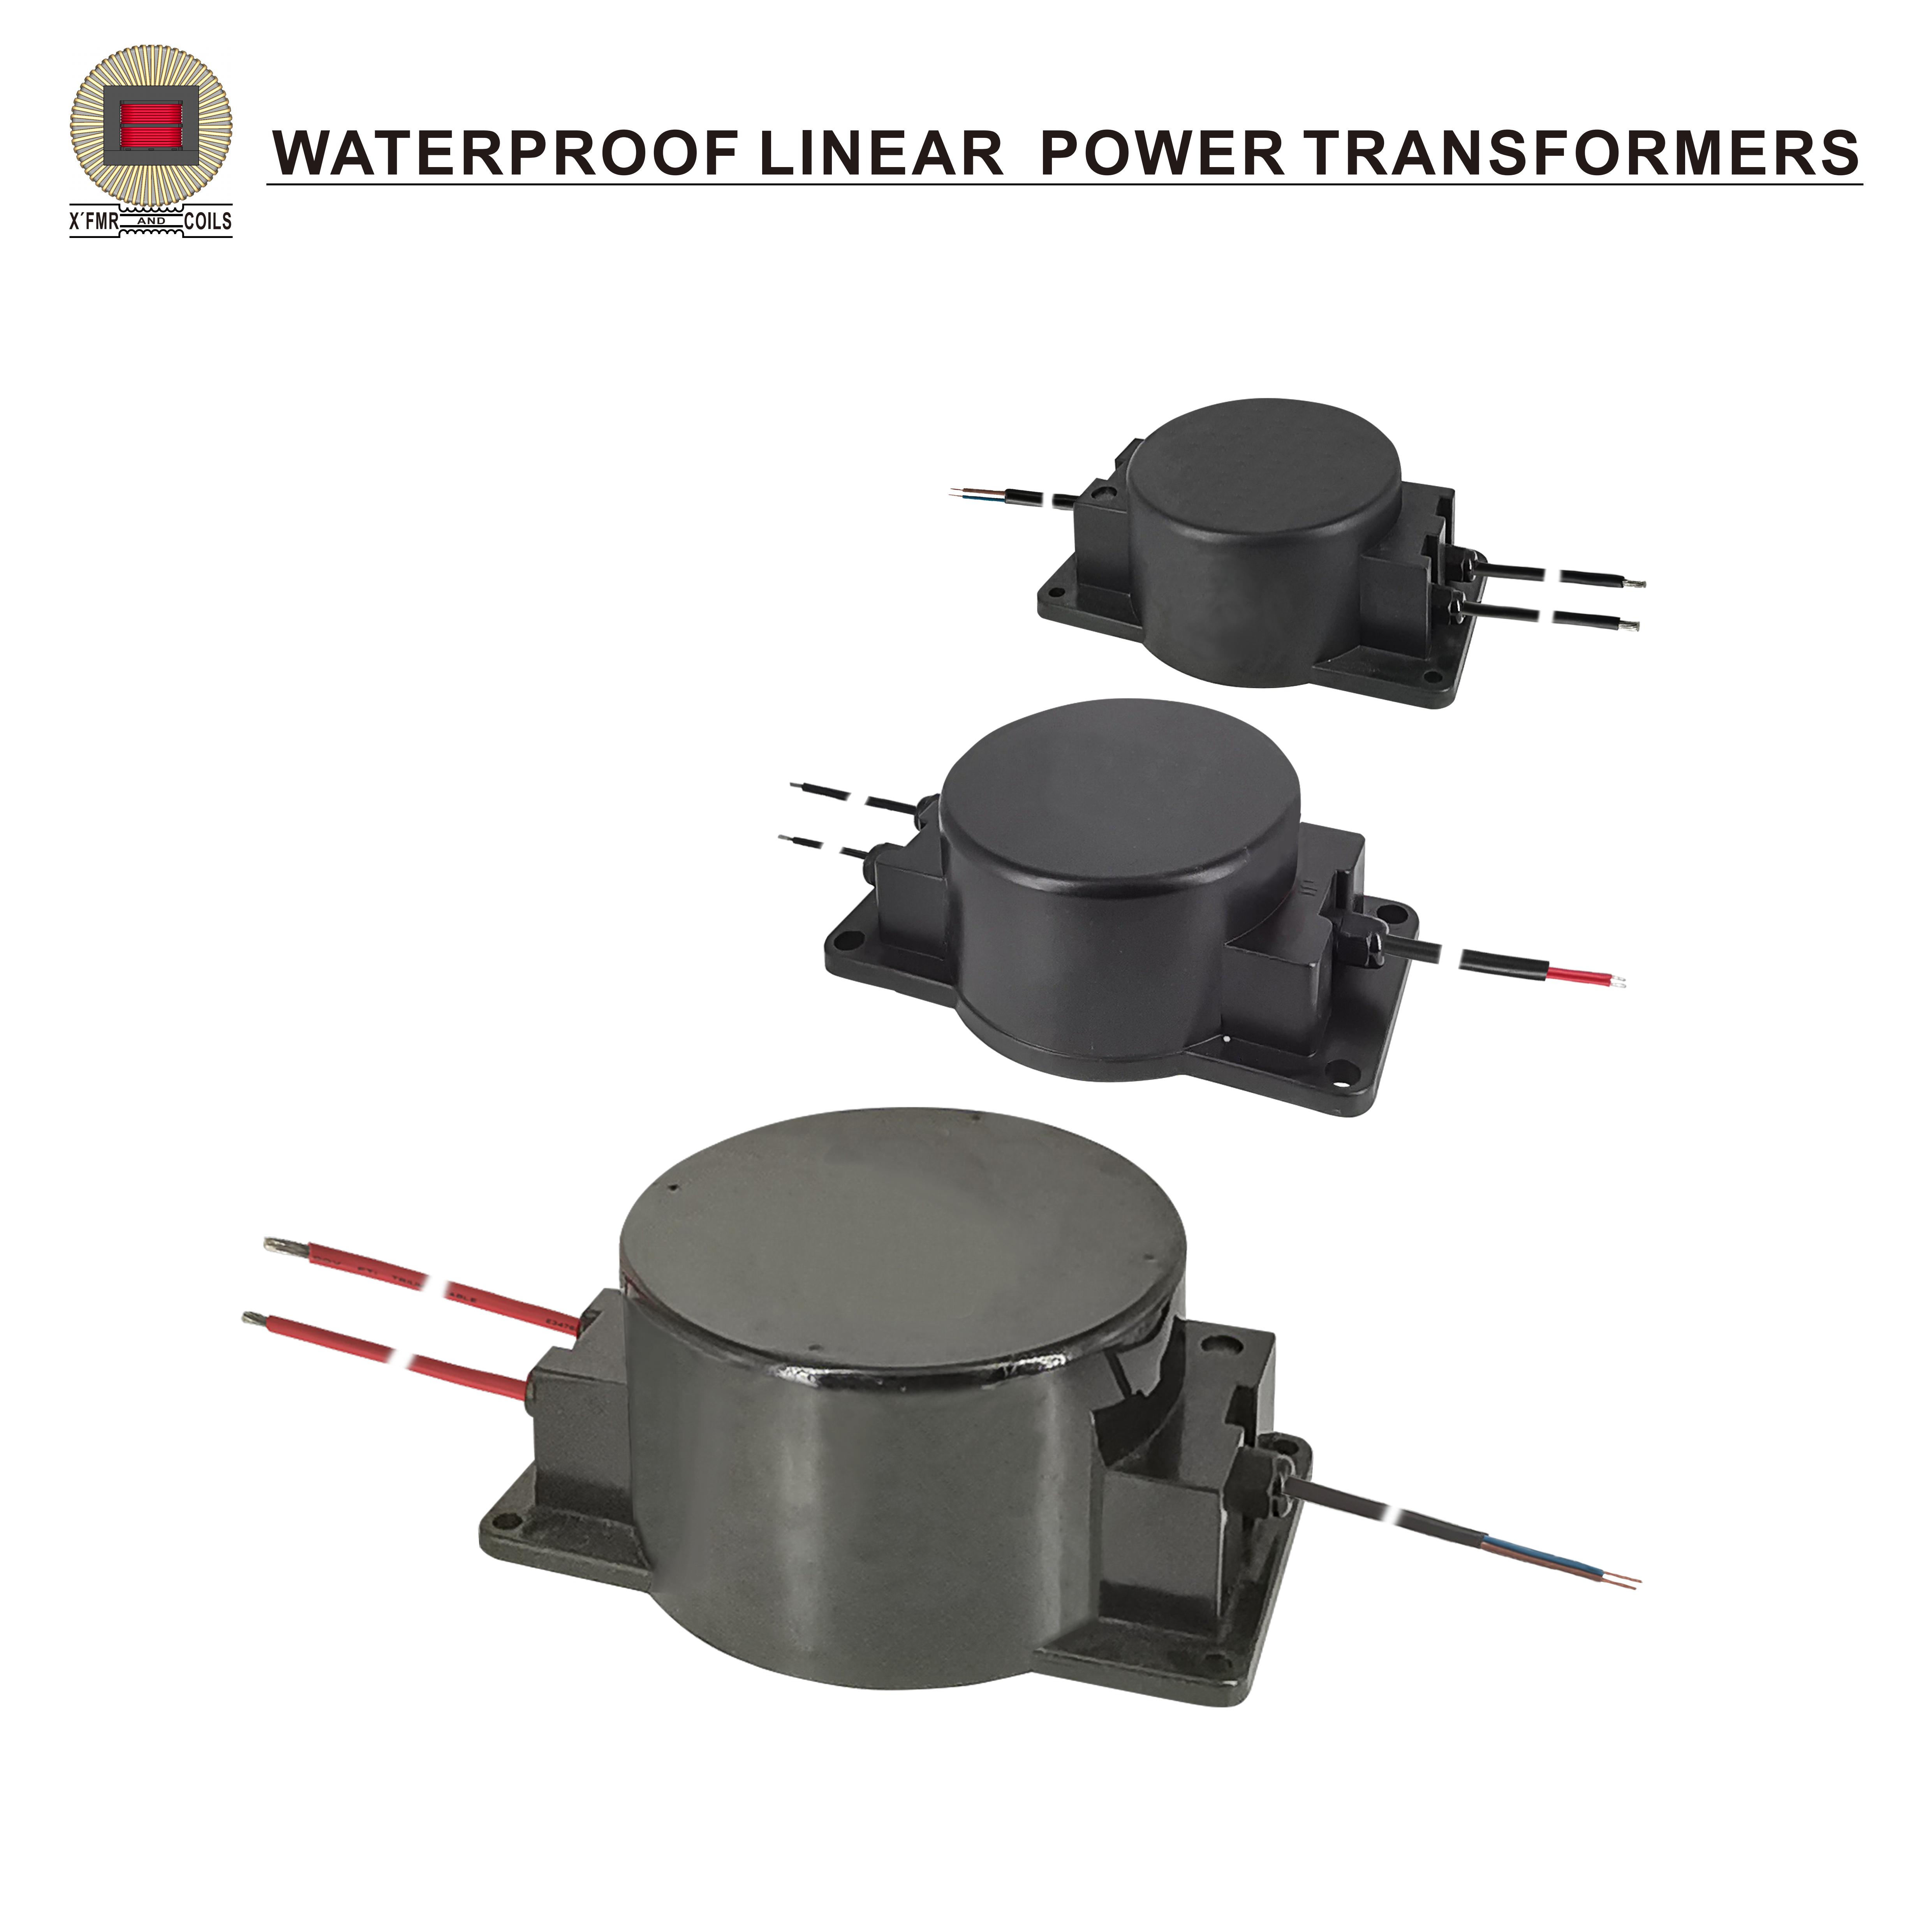 Waterproof Linear Power Transformers WLPT-02 Series